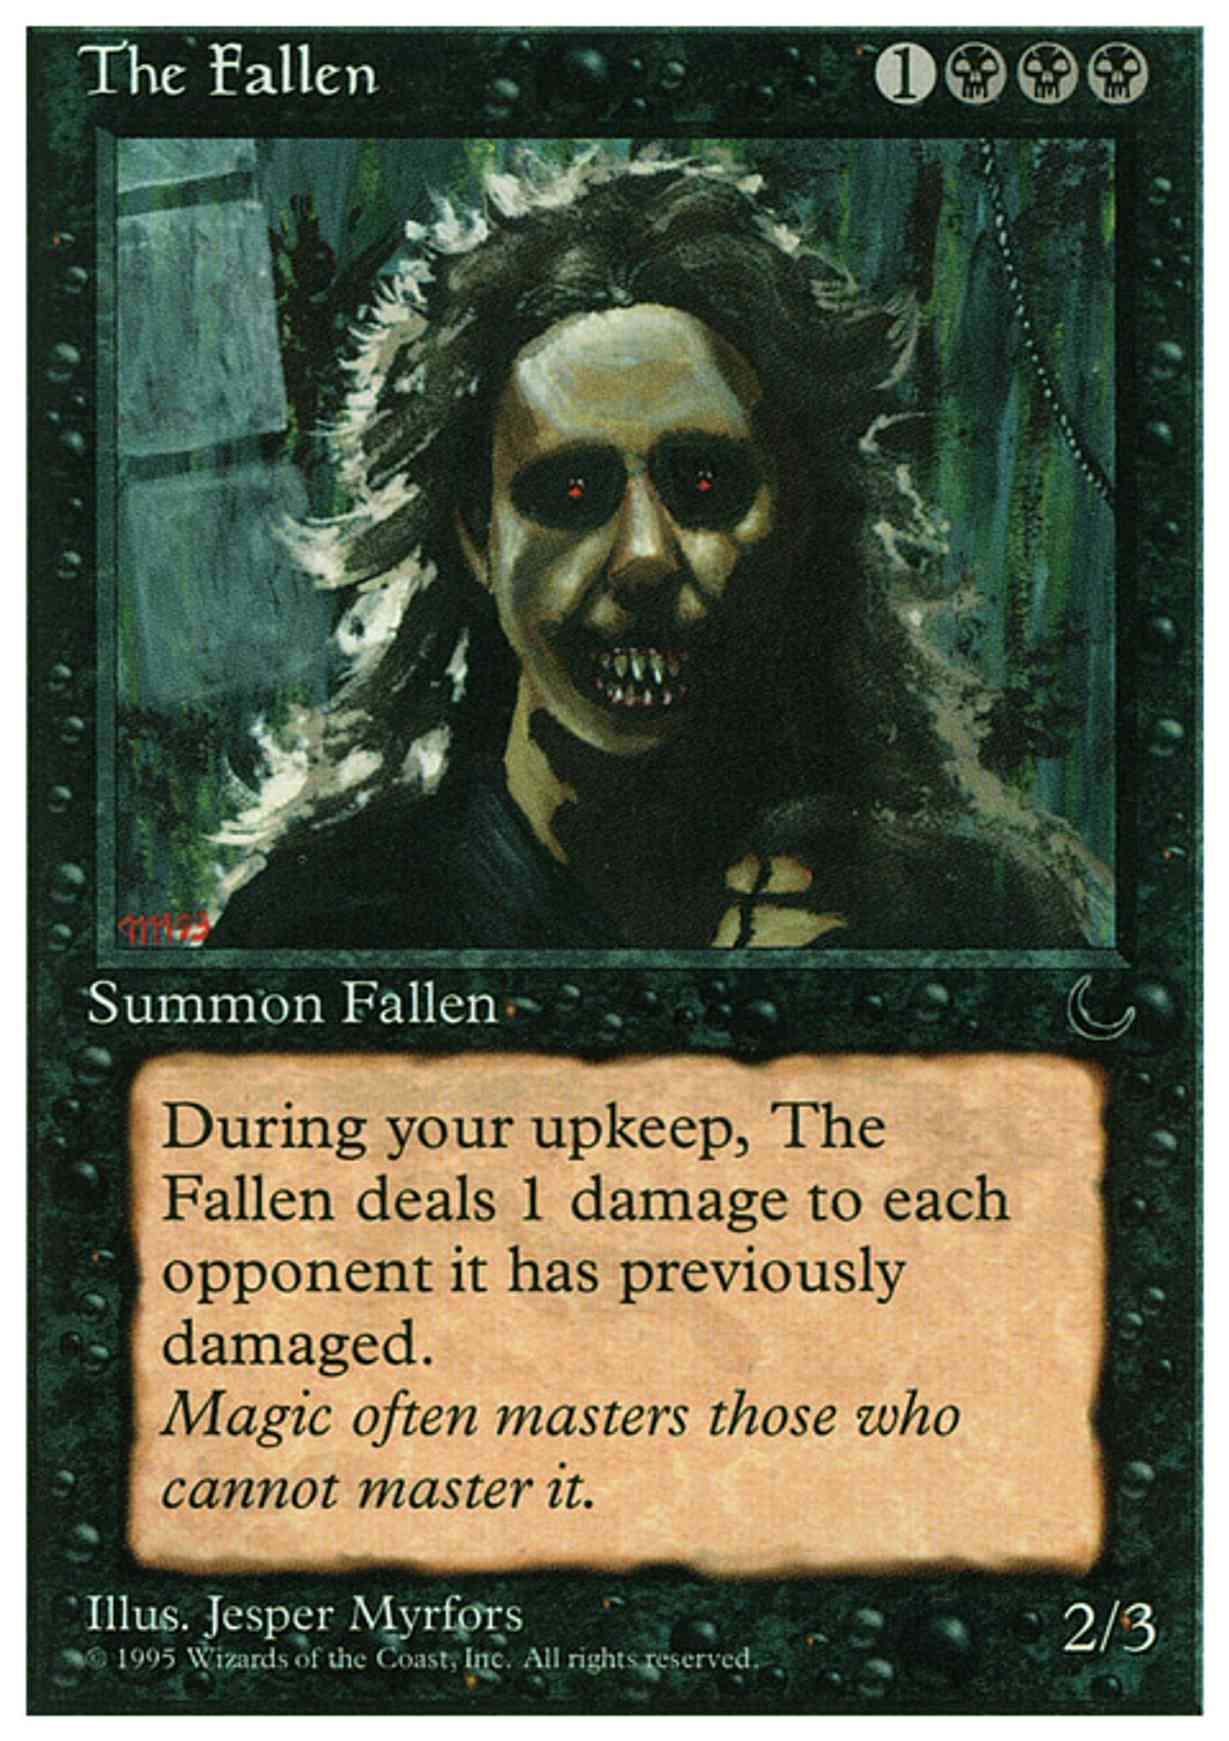 The Fallen magic card front